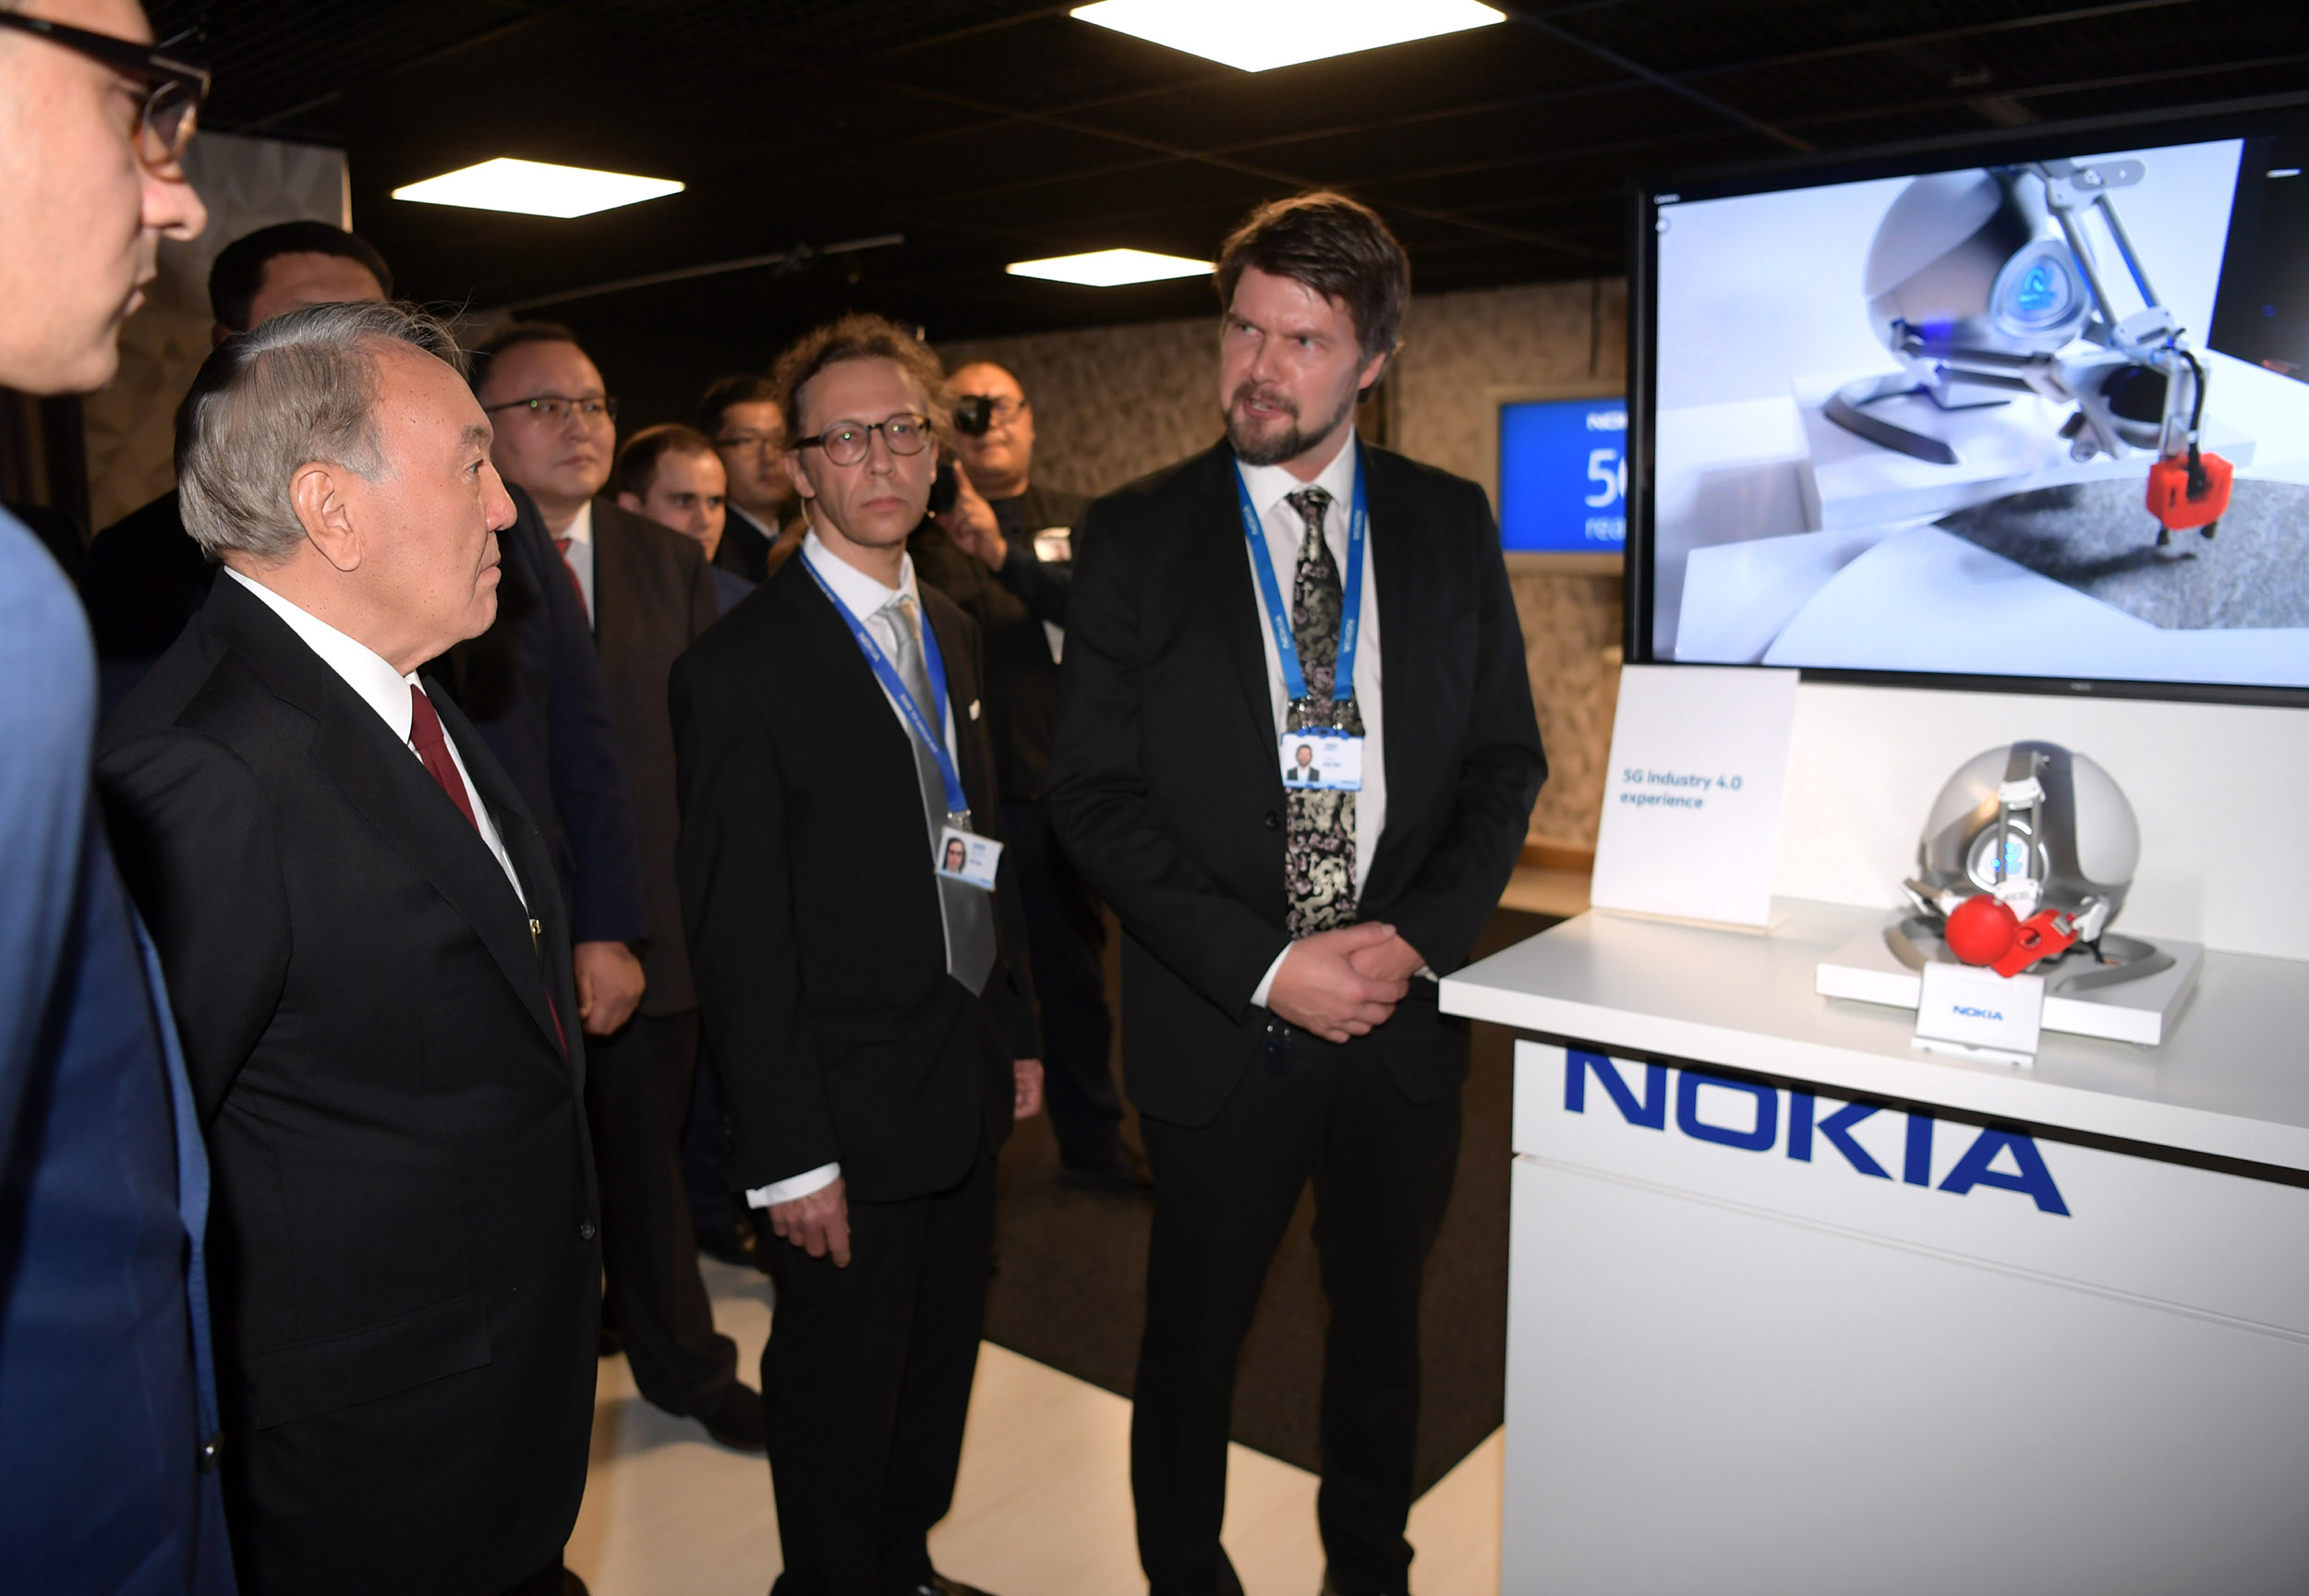 Нурсултан Назарбаев посетил презентационную площадку компании Nokia